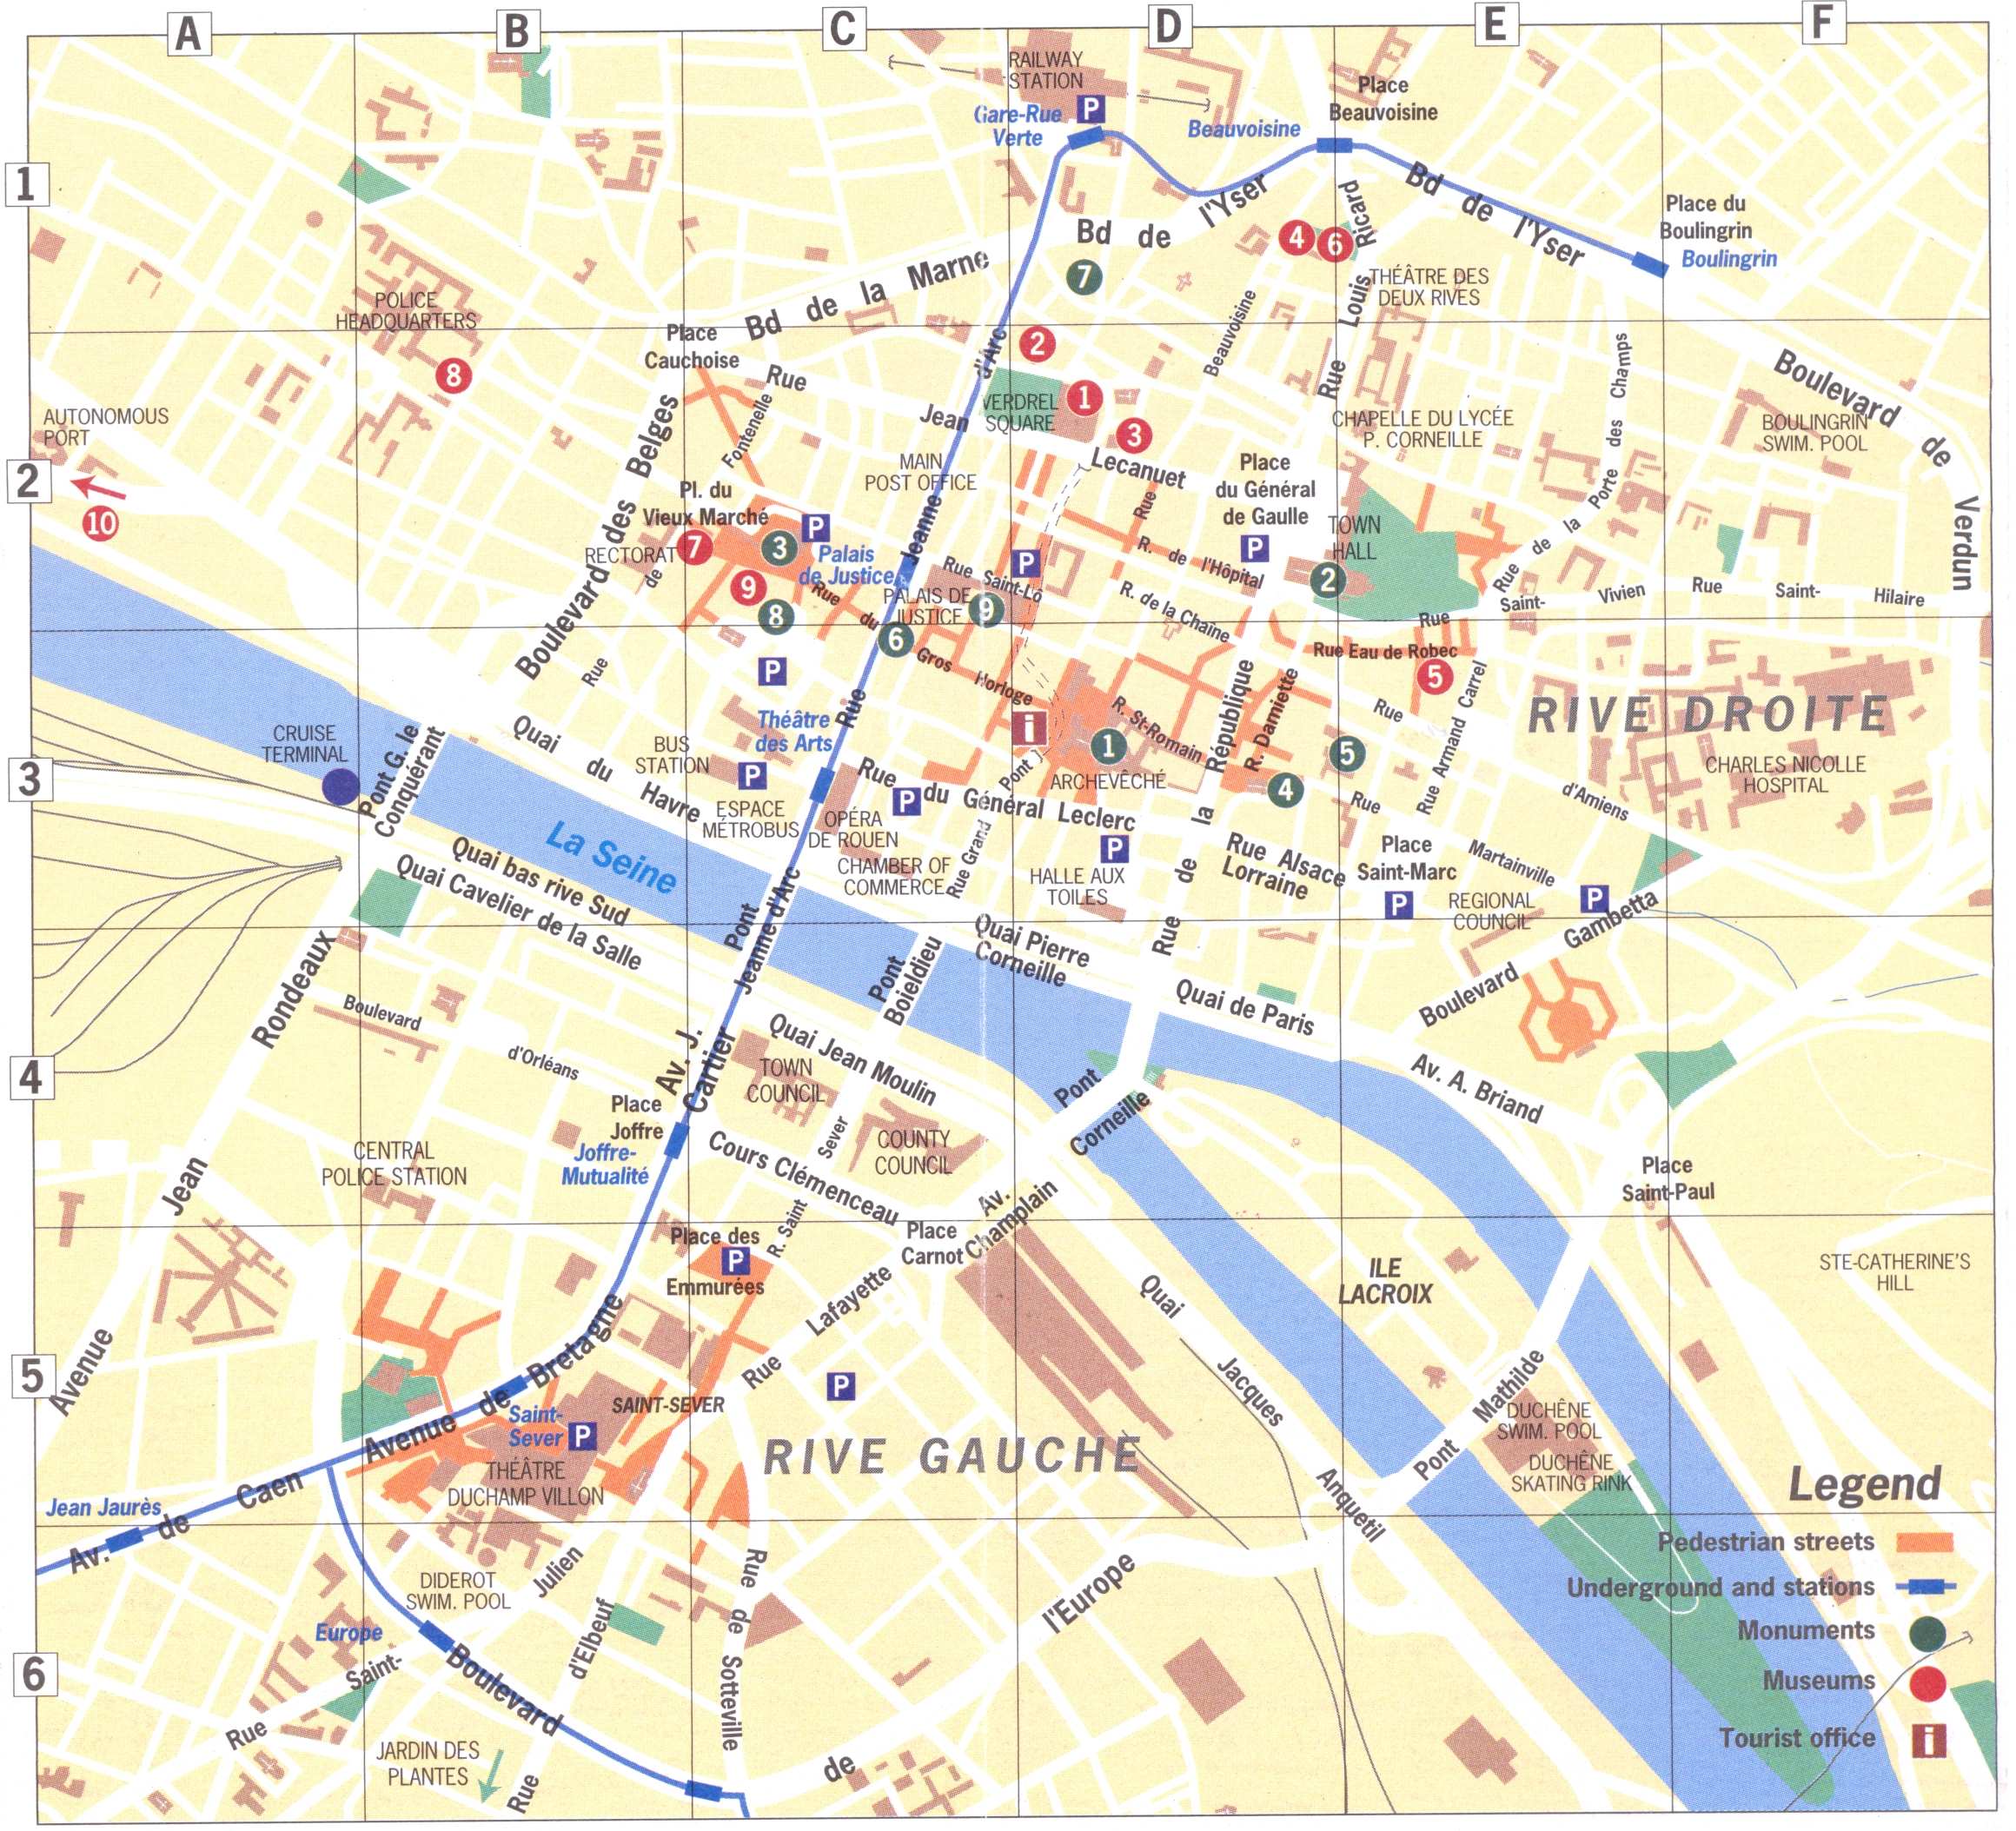 rouen france map